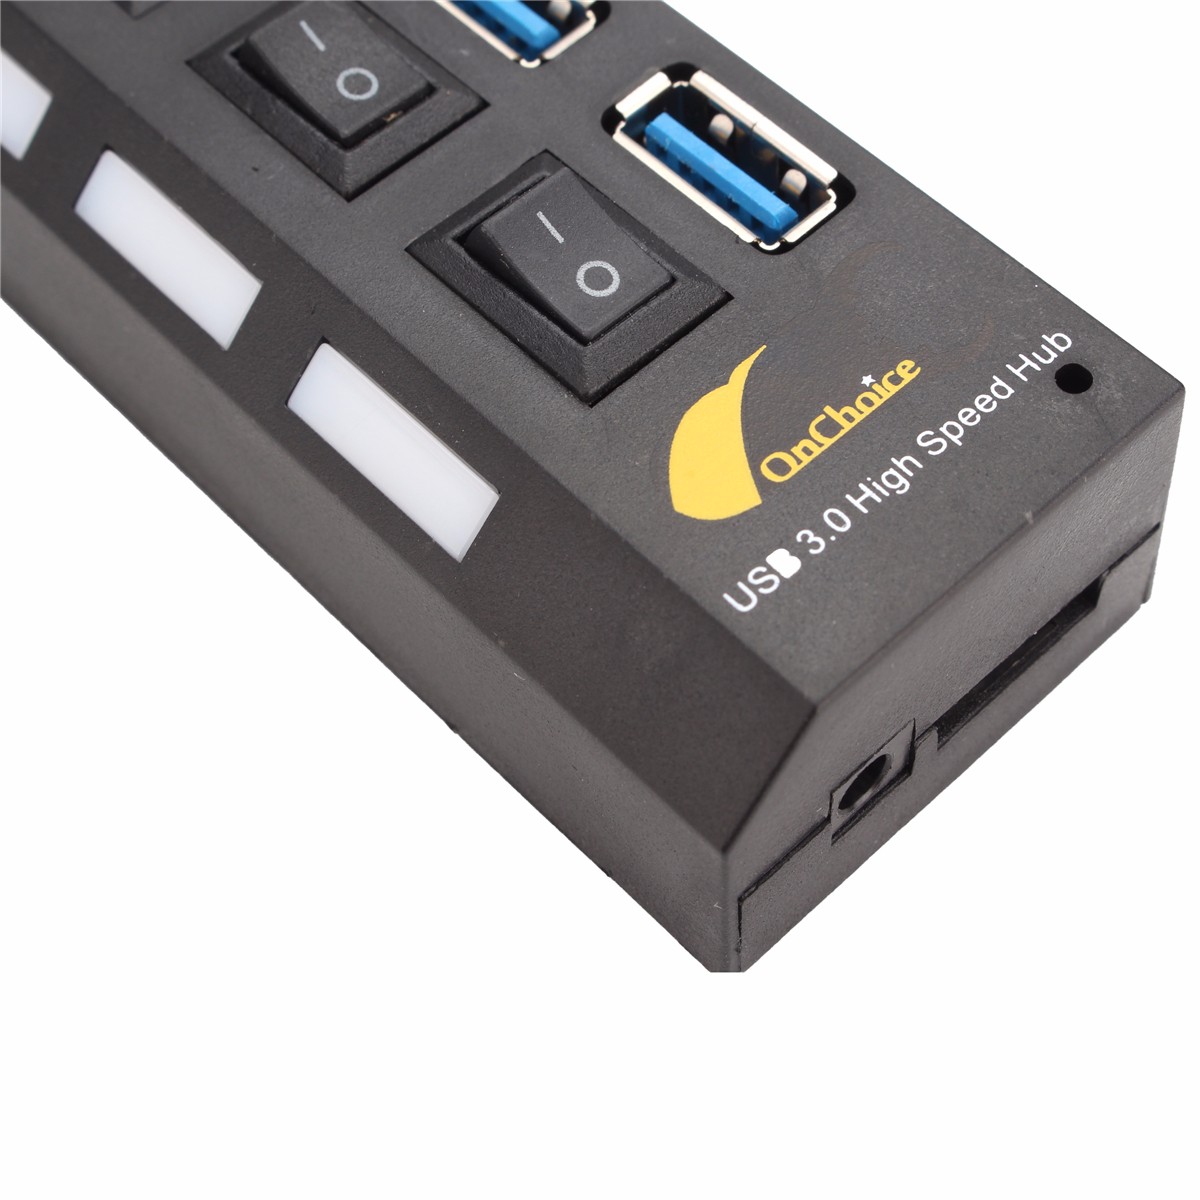 ONCHOICE 7Port USB 3.0 Hub On/Off Switch EU US UK AC Power Adapter For Laptop Desktop 17